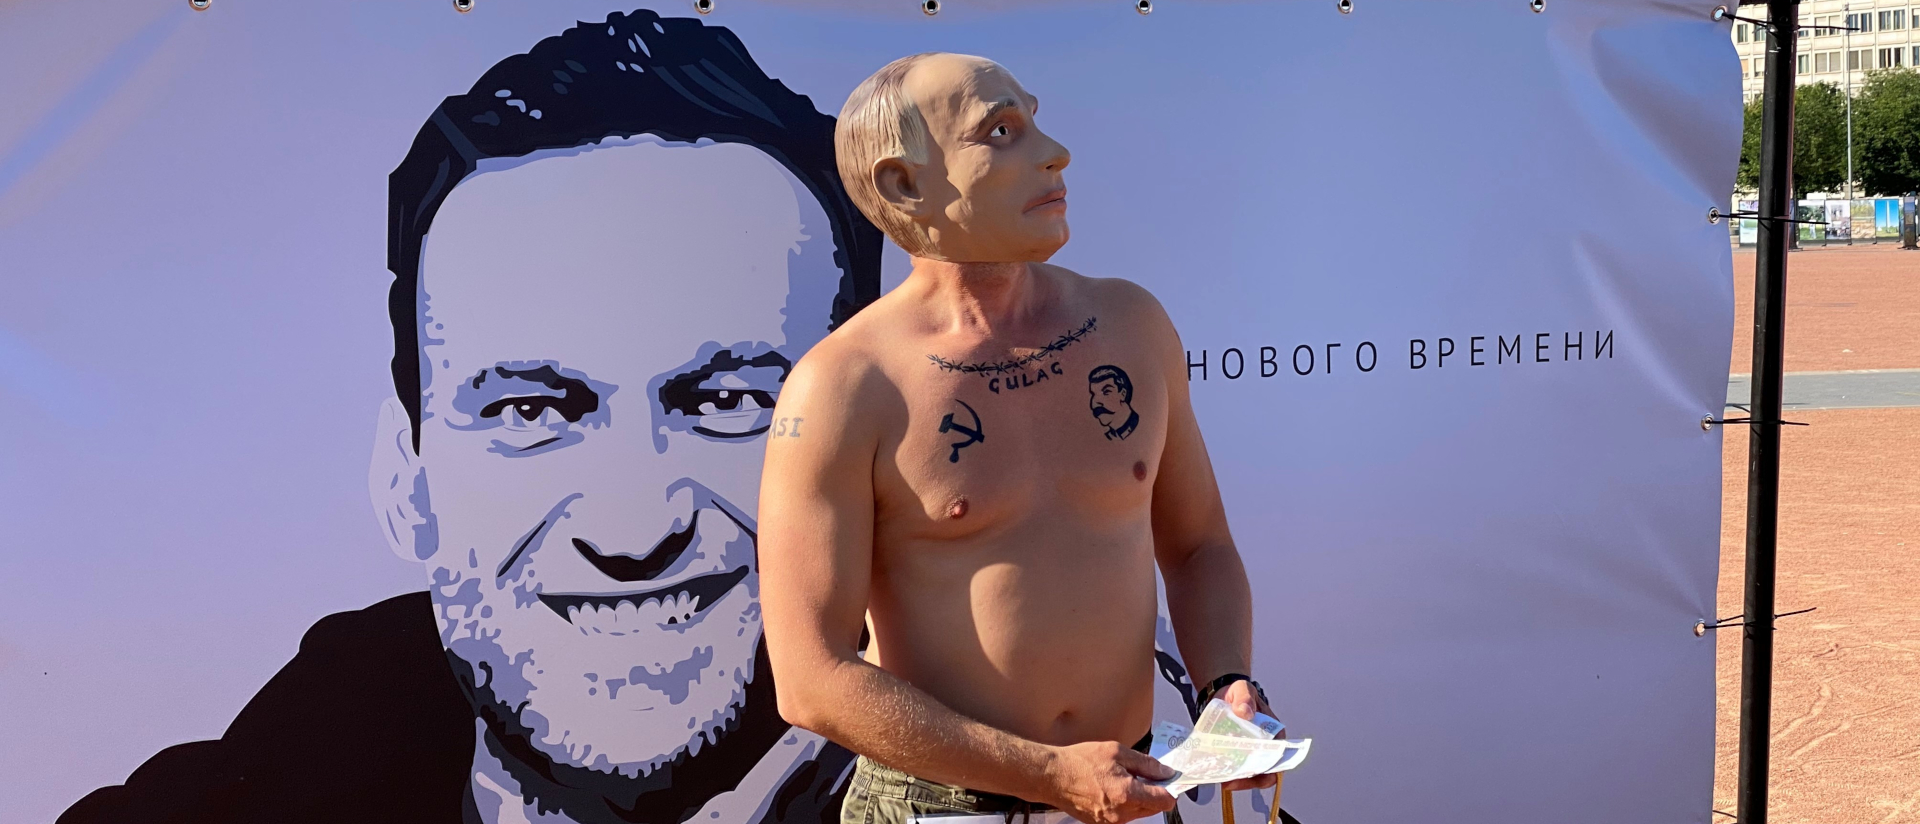 Pro Alexei Nawalny, contra Putin: eine Protestaktion im Juni 2021 in Genf.